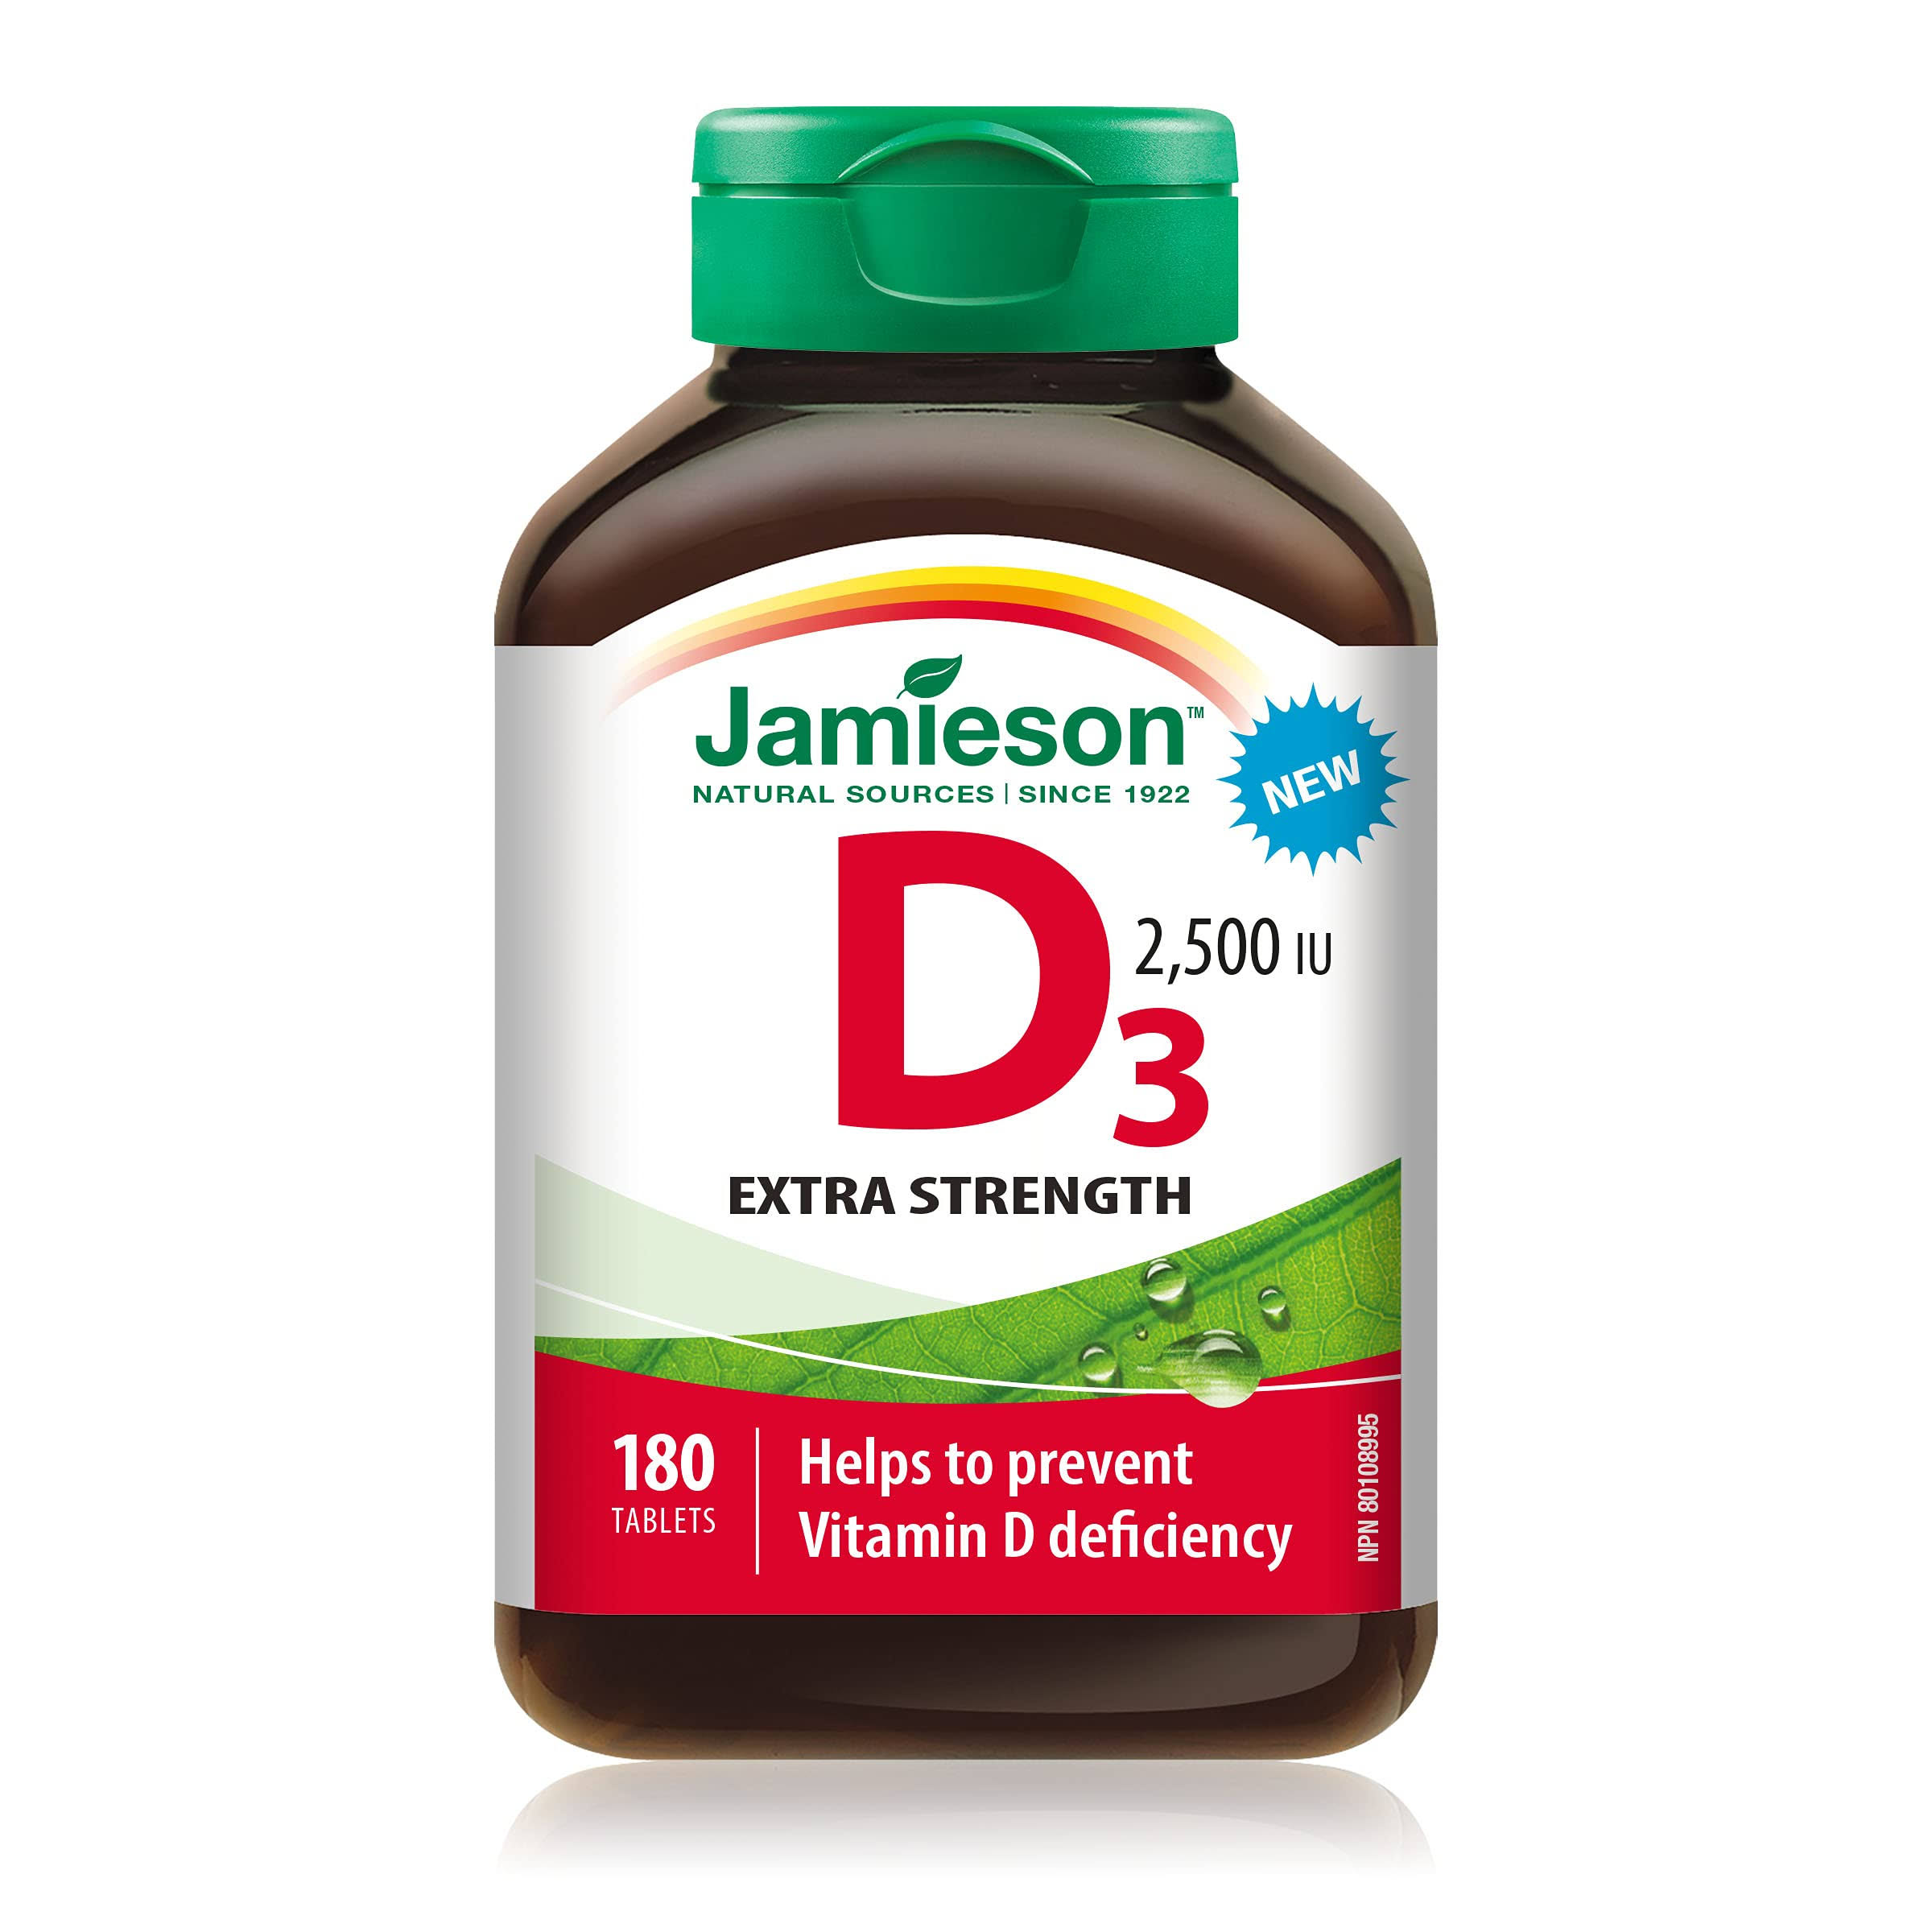 Jamieson Vitamin D3 - 2,500 IU Extra Strength - 180 Tablets